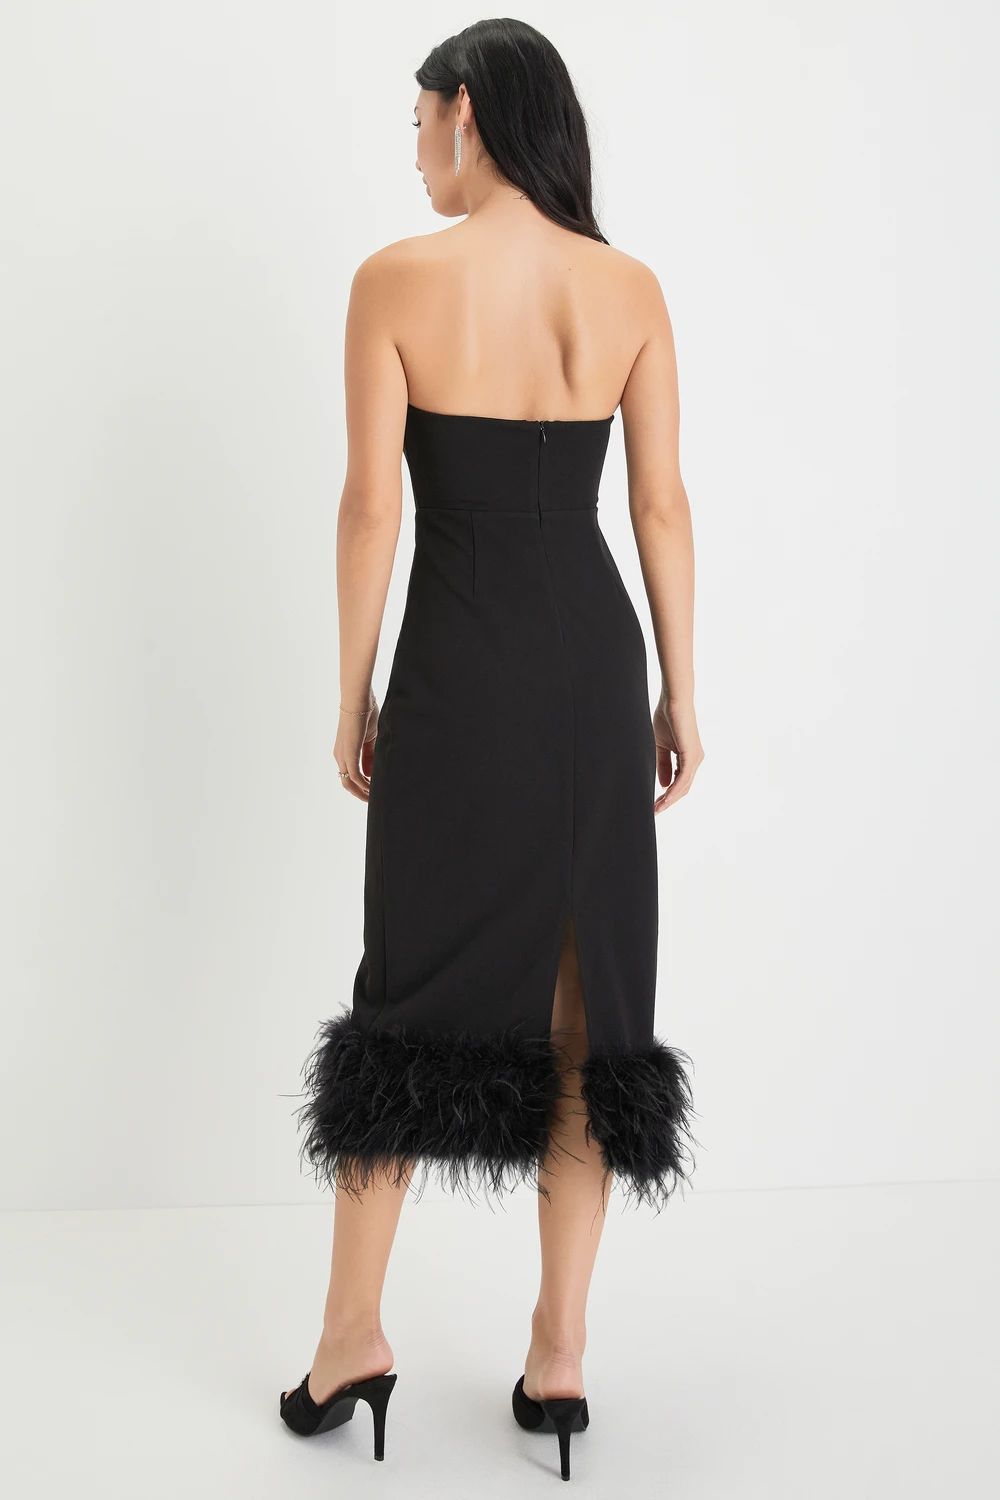 Fancy Behavior Black Bustier Strapless Feather Midi Dress | Lulus (US)